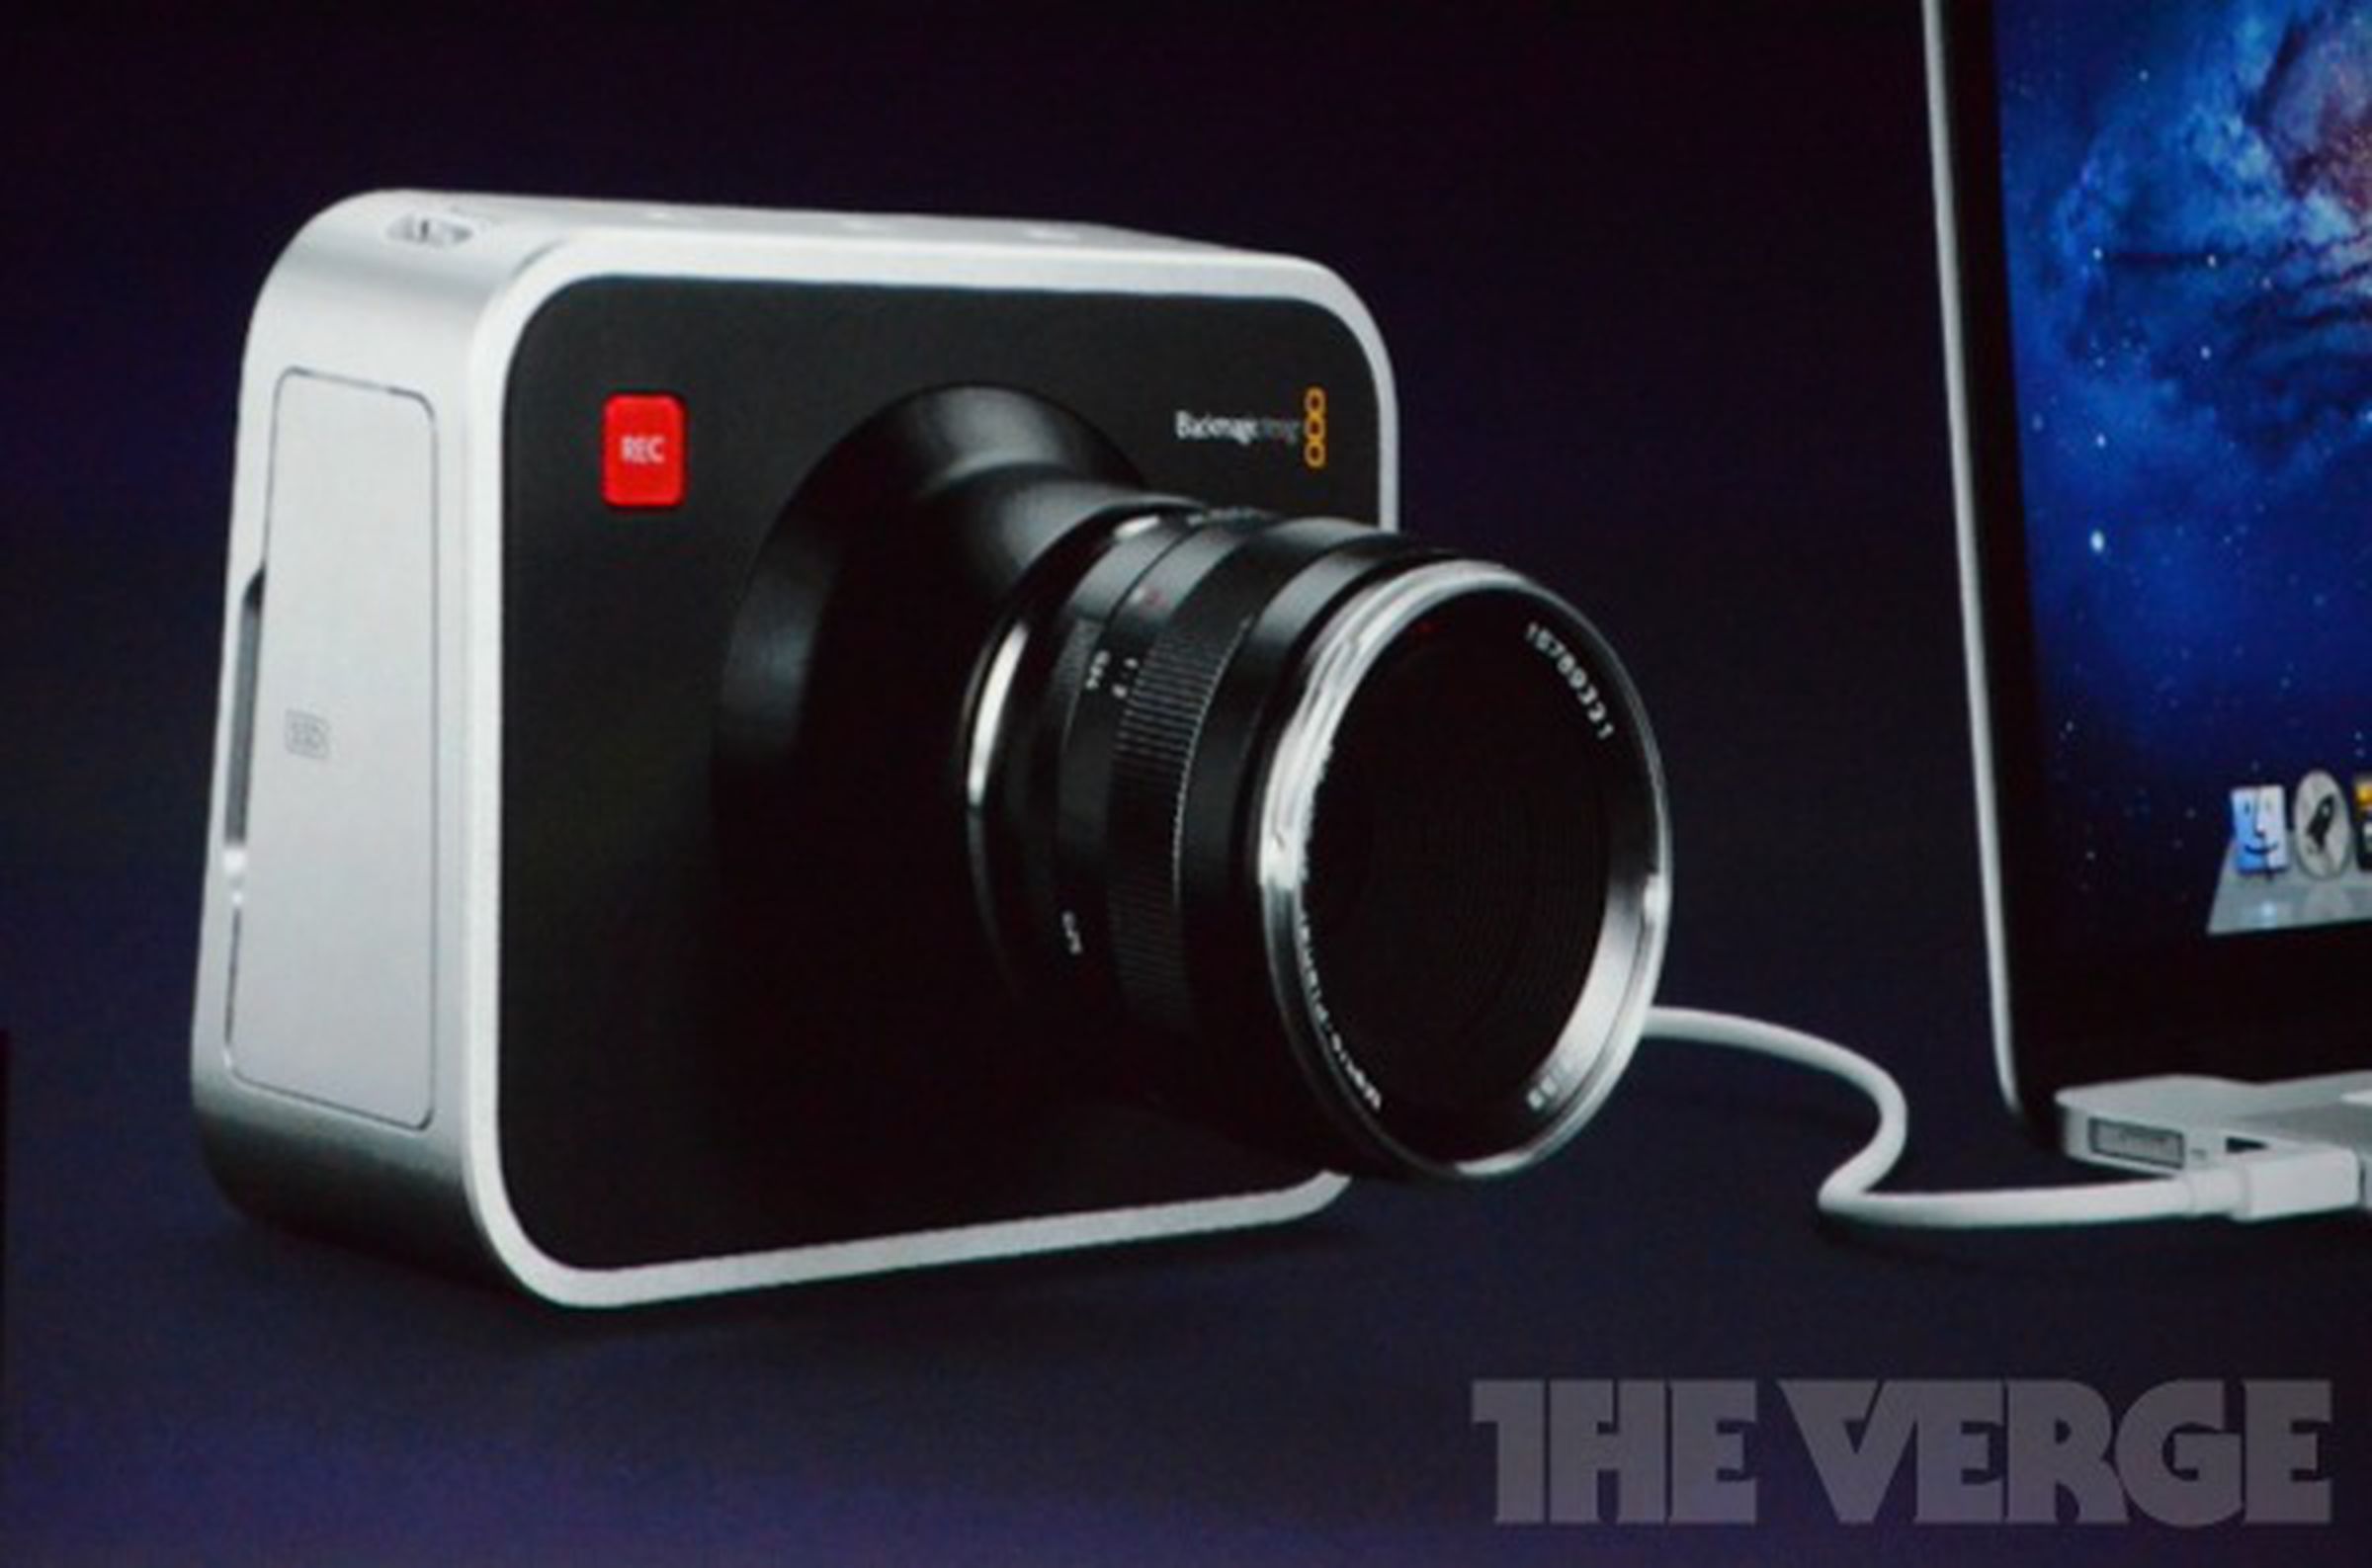 Thunderbolt port accessories for new Macbook Pro liveblog photos